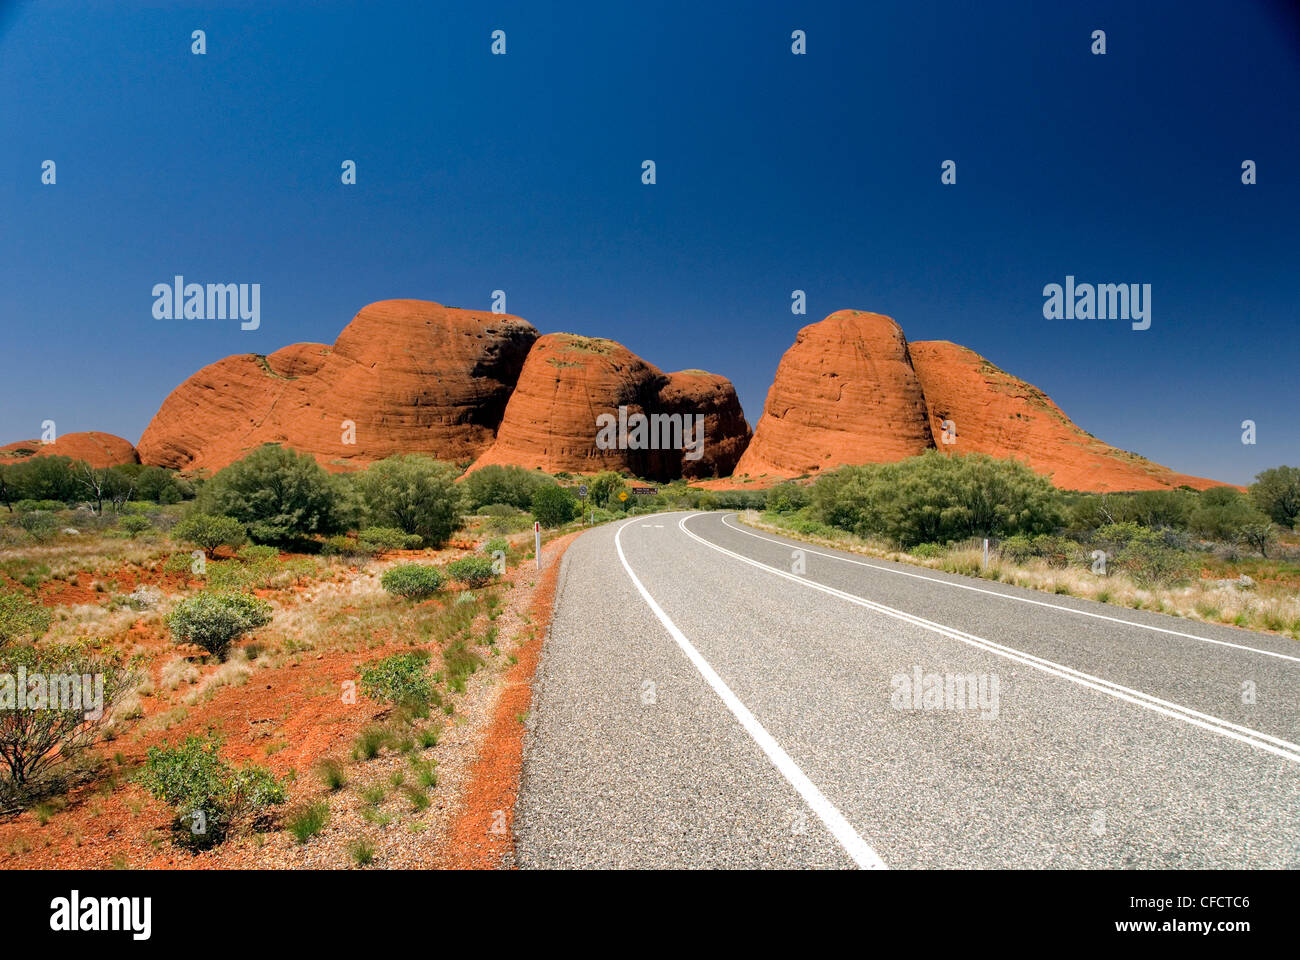 The Olgas, monoliths of hard sandstone, near Uluru (Ayers Rock), Uluru-Kata Tjuta National Park, Northern Territory, Australia Stock Photo